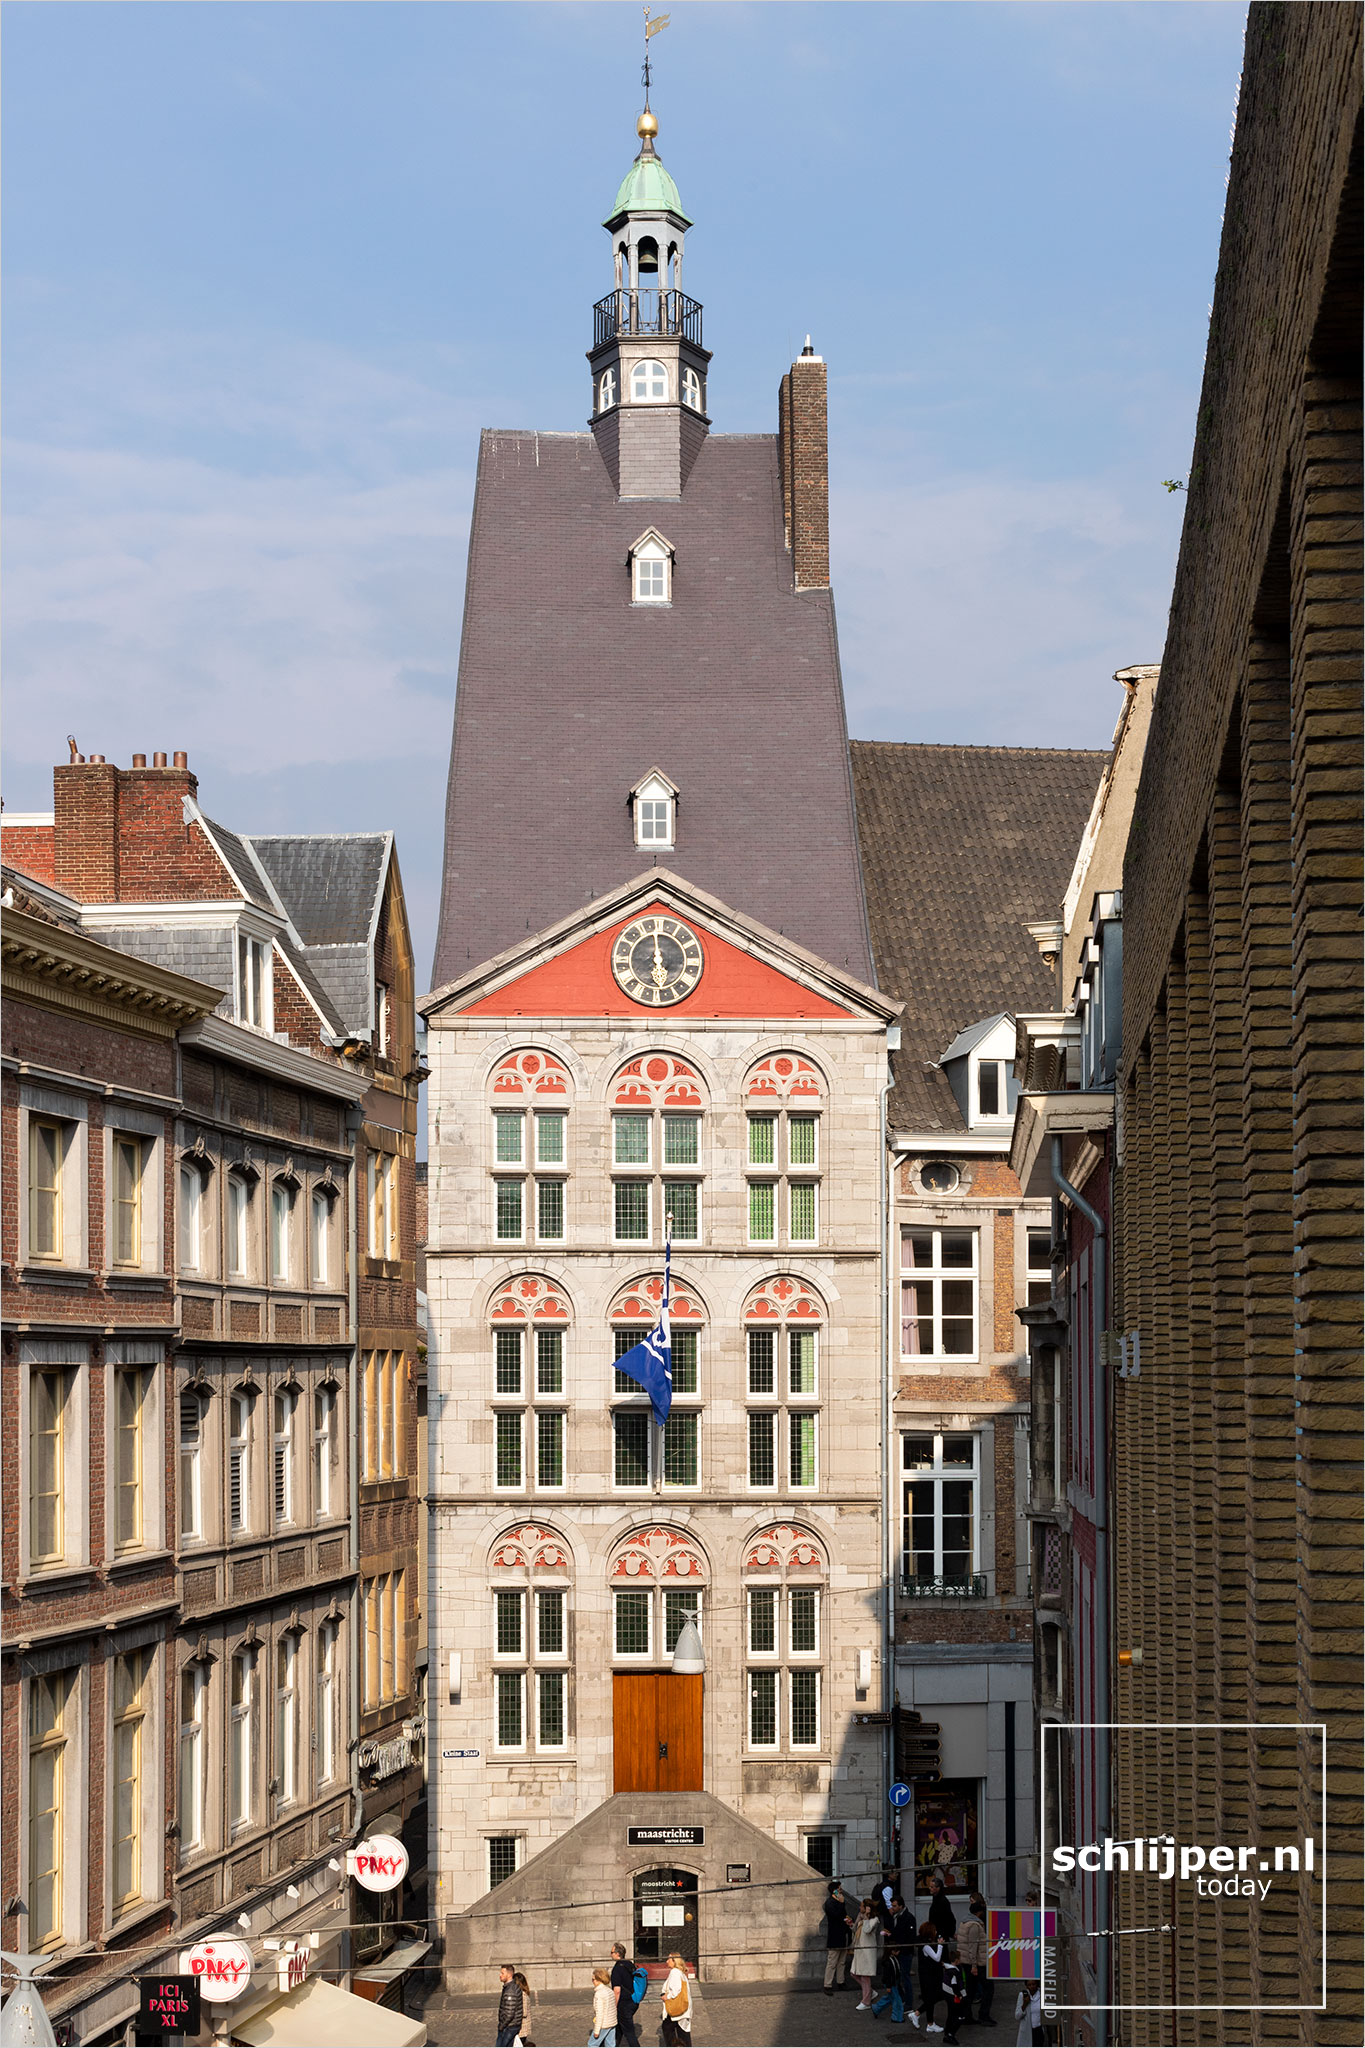 The Netherlands, Maastricht, 1 mei 2022